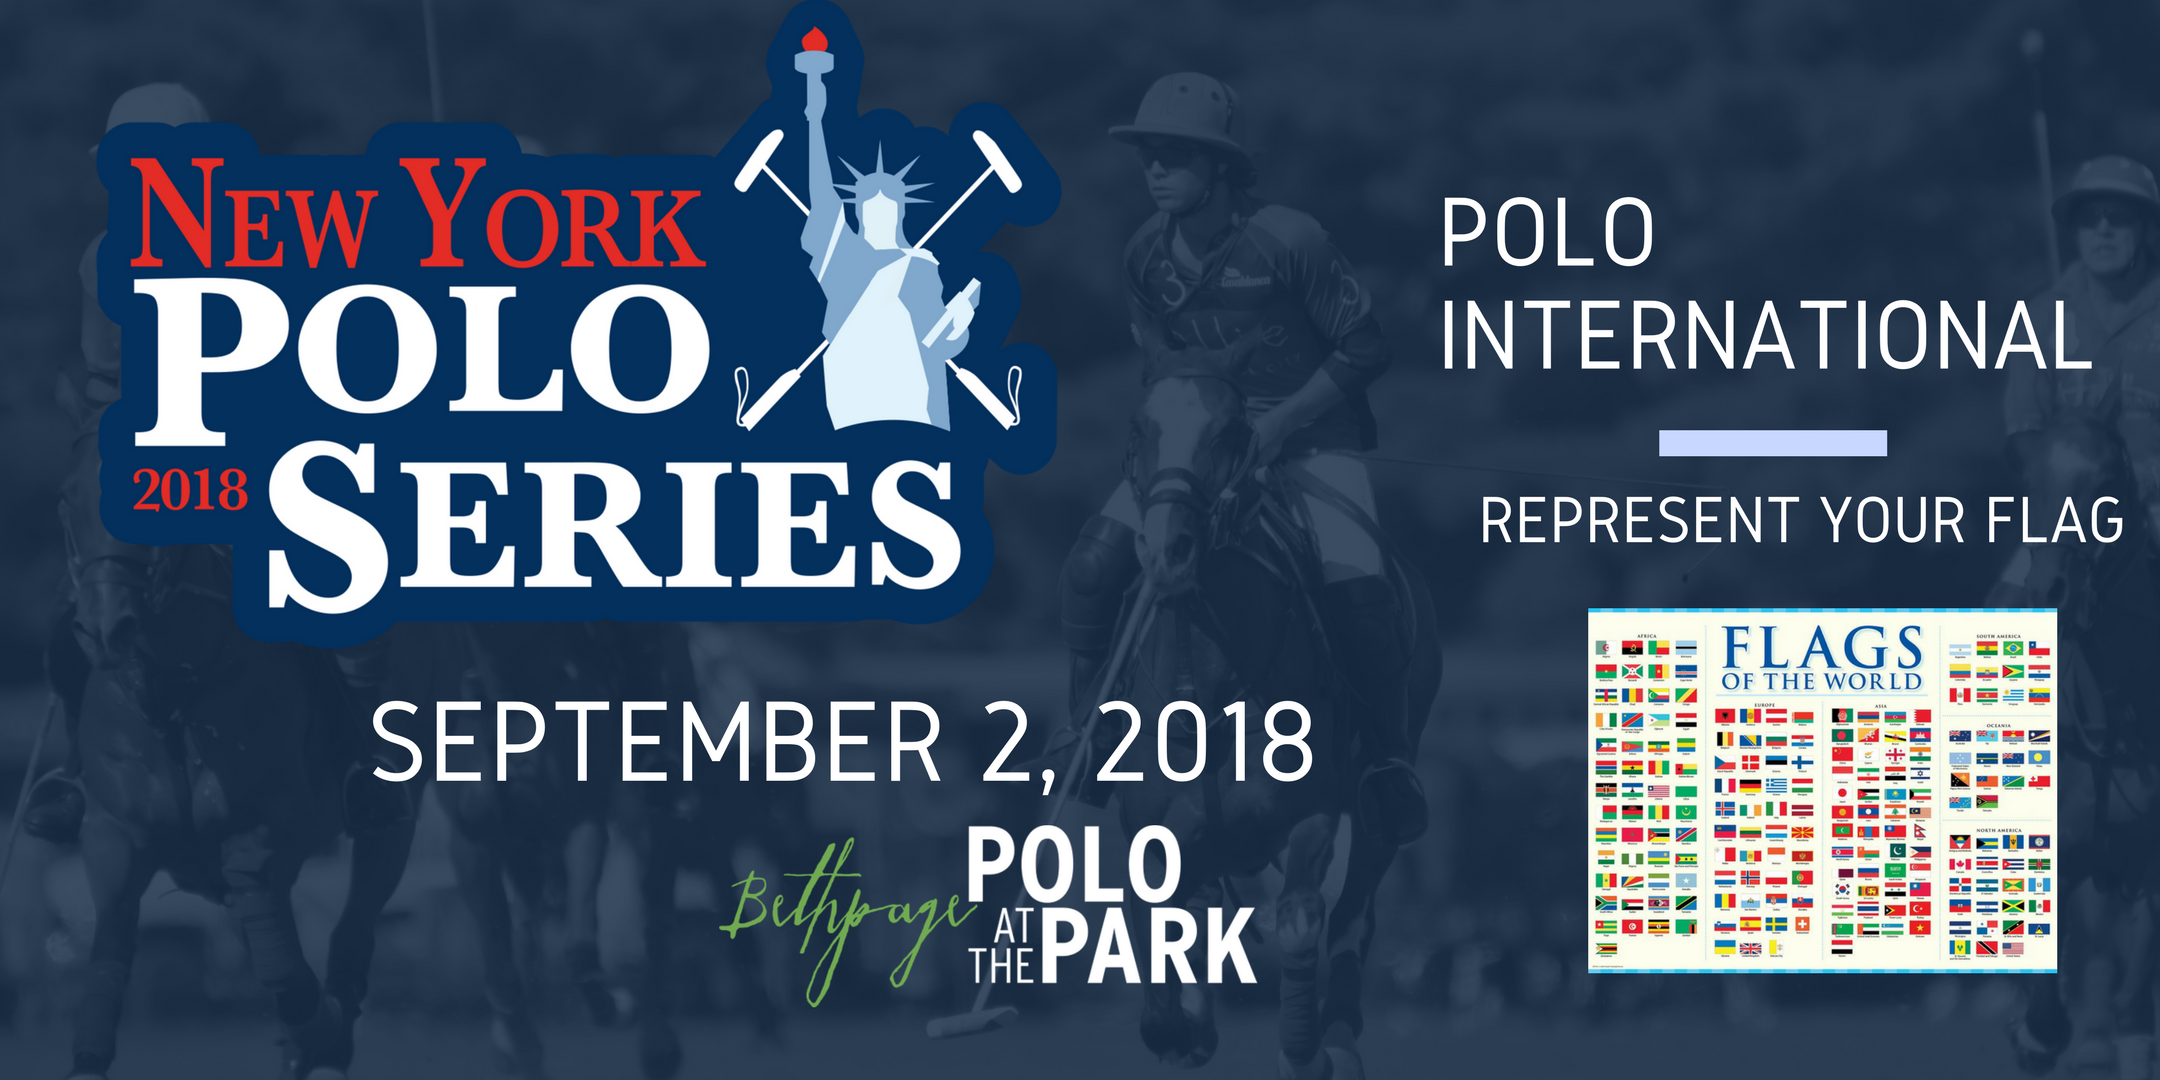 New York Polo Series (9/2 - Polo International /Carnival)